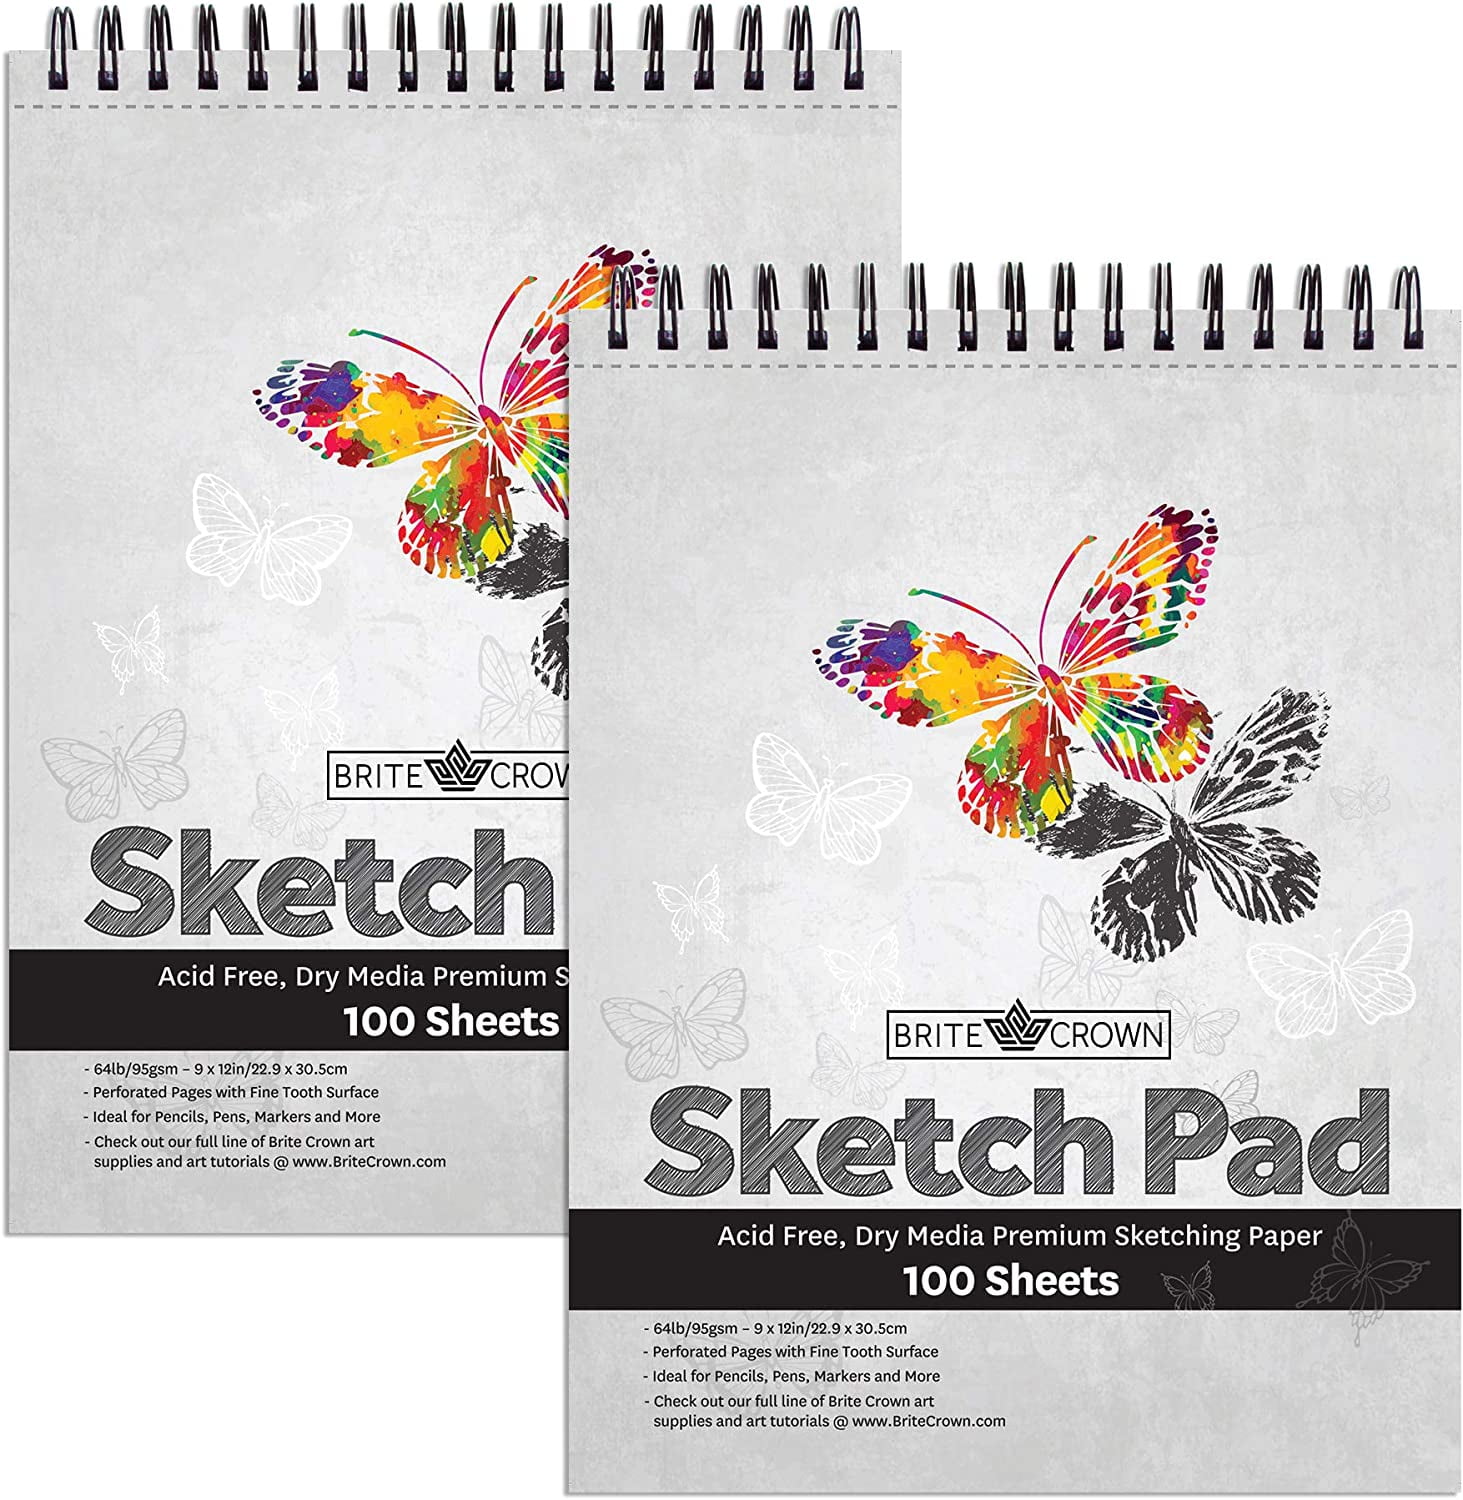 Vanda Sketch Pad Drawing Pad 6x9inch small